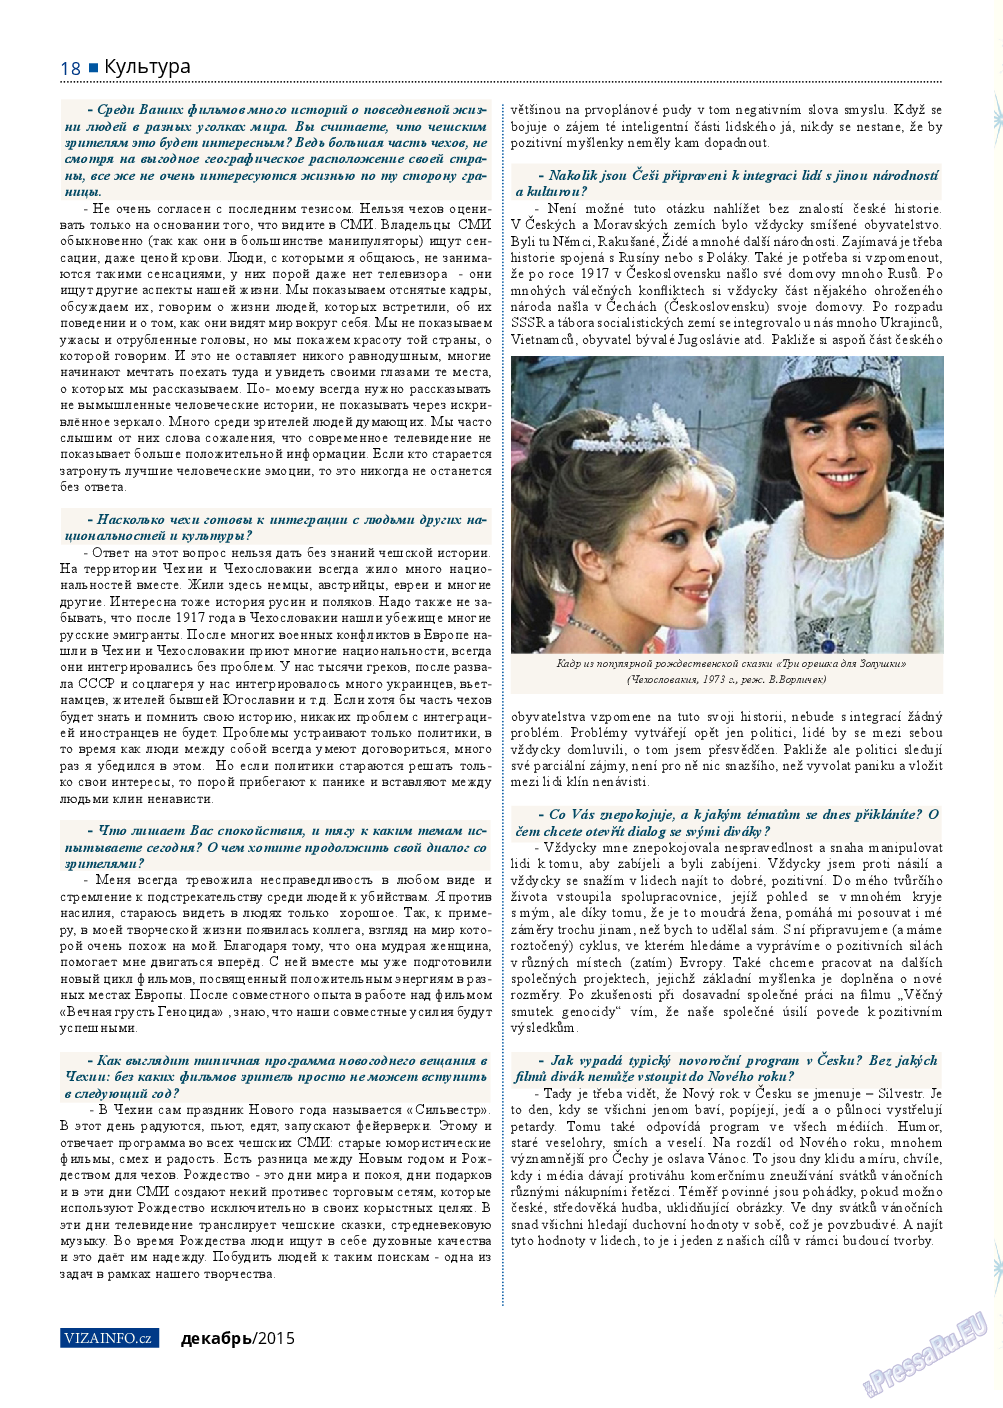 Vizainfo.cz (газета). 2015 год, номер 75, стр. 18